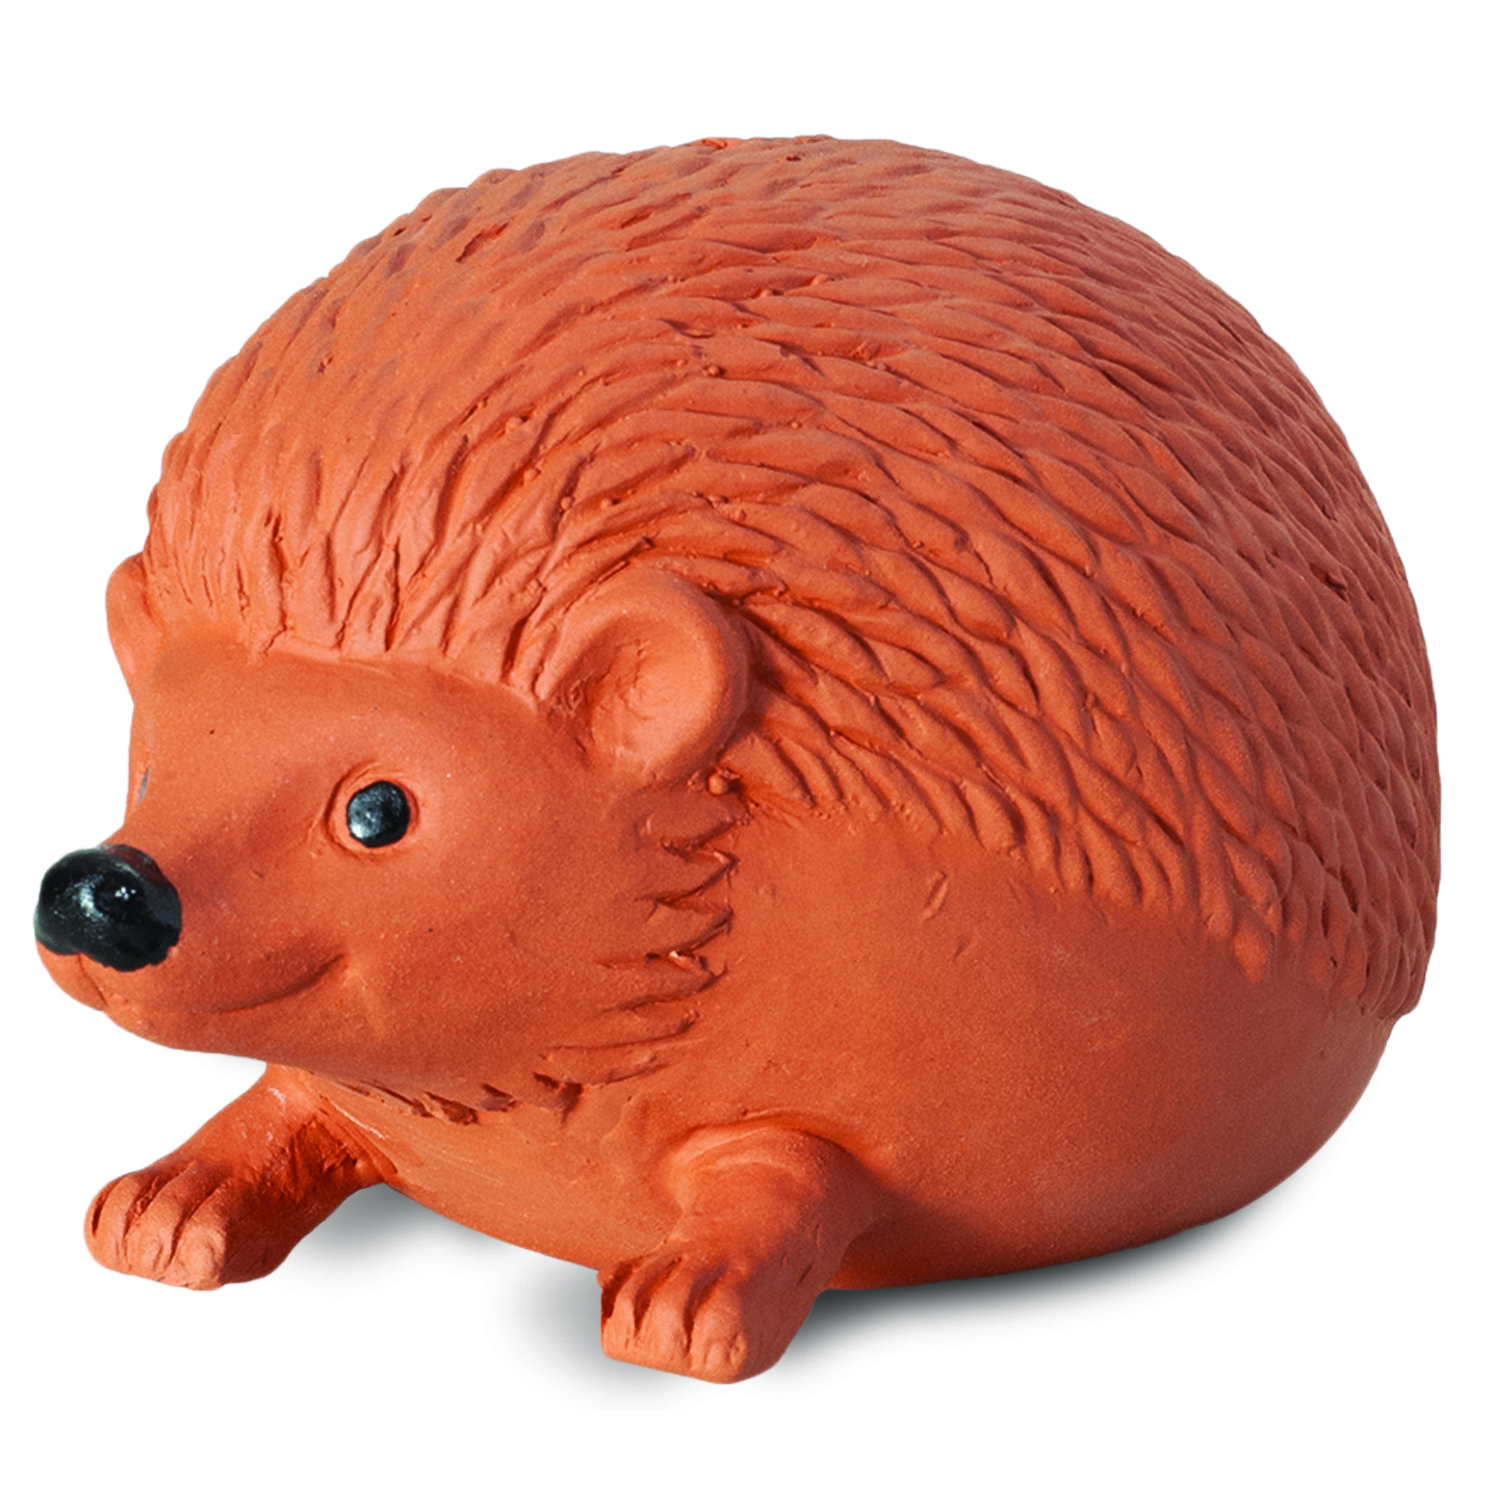 Chia Pet Hedgehog Decorative Planter Clay 1 pk - image 4 of 4